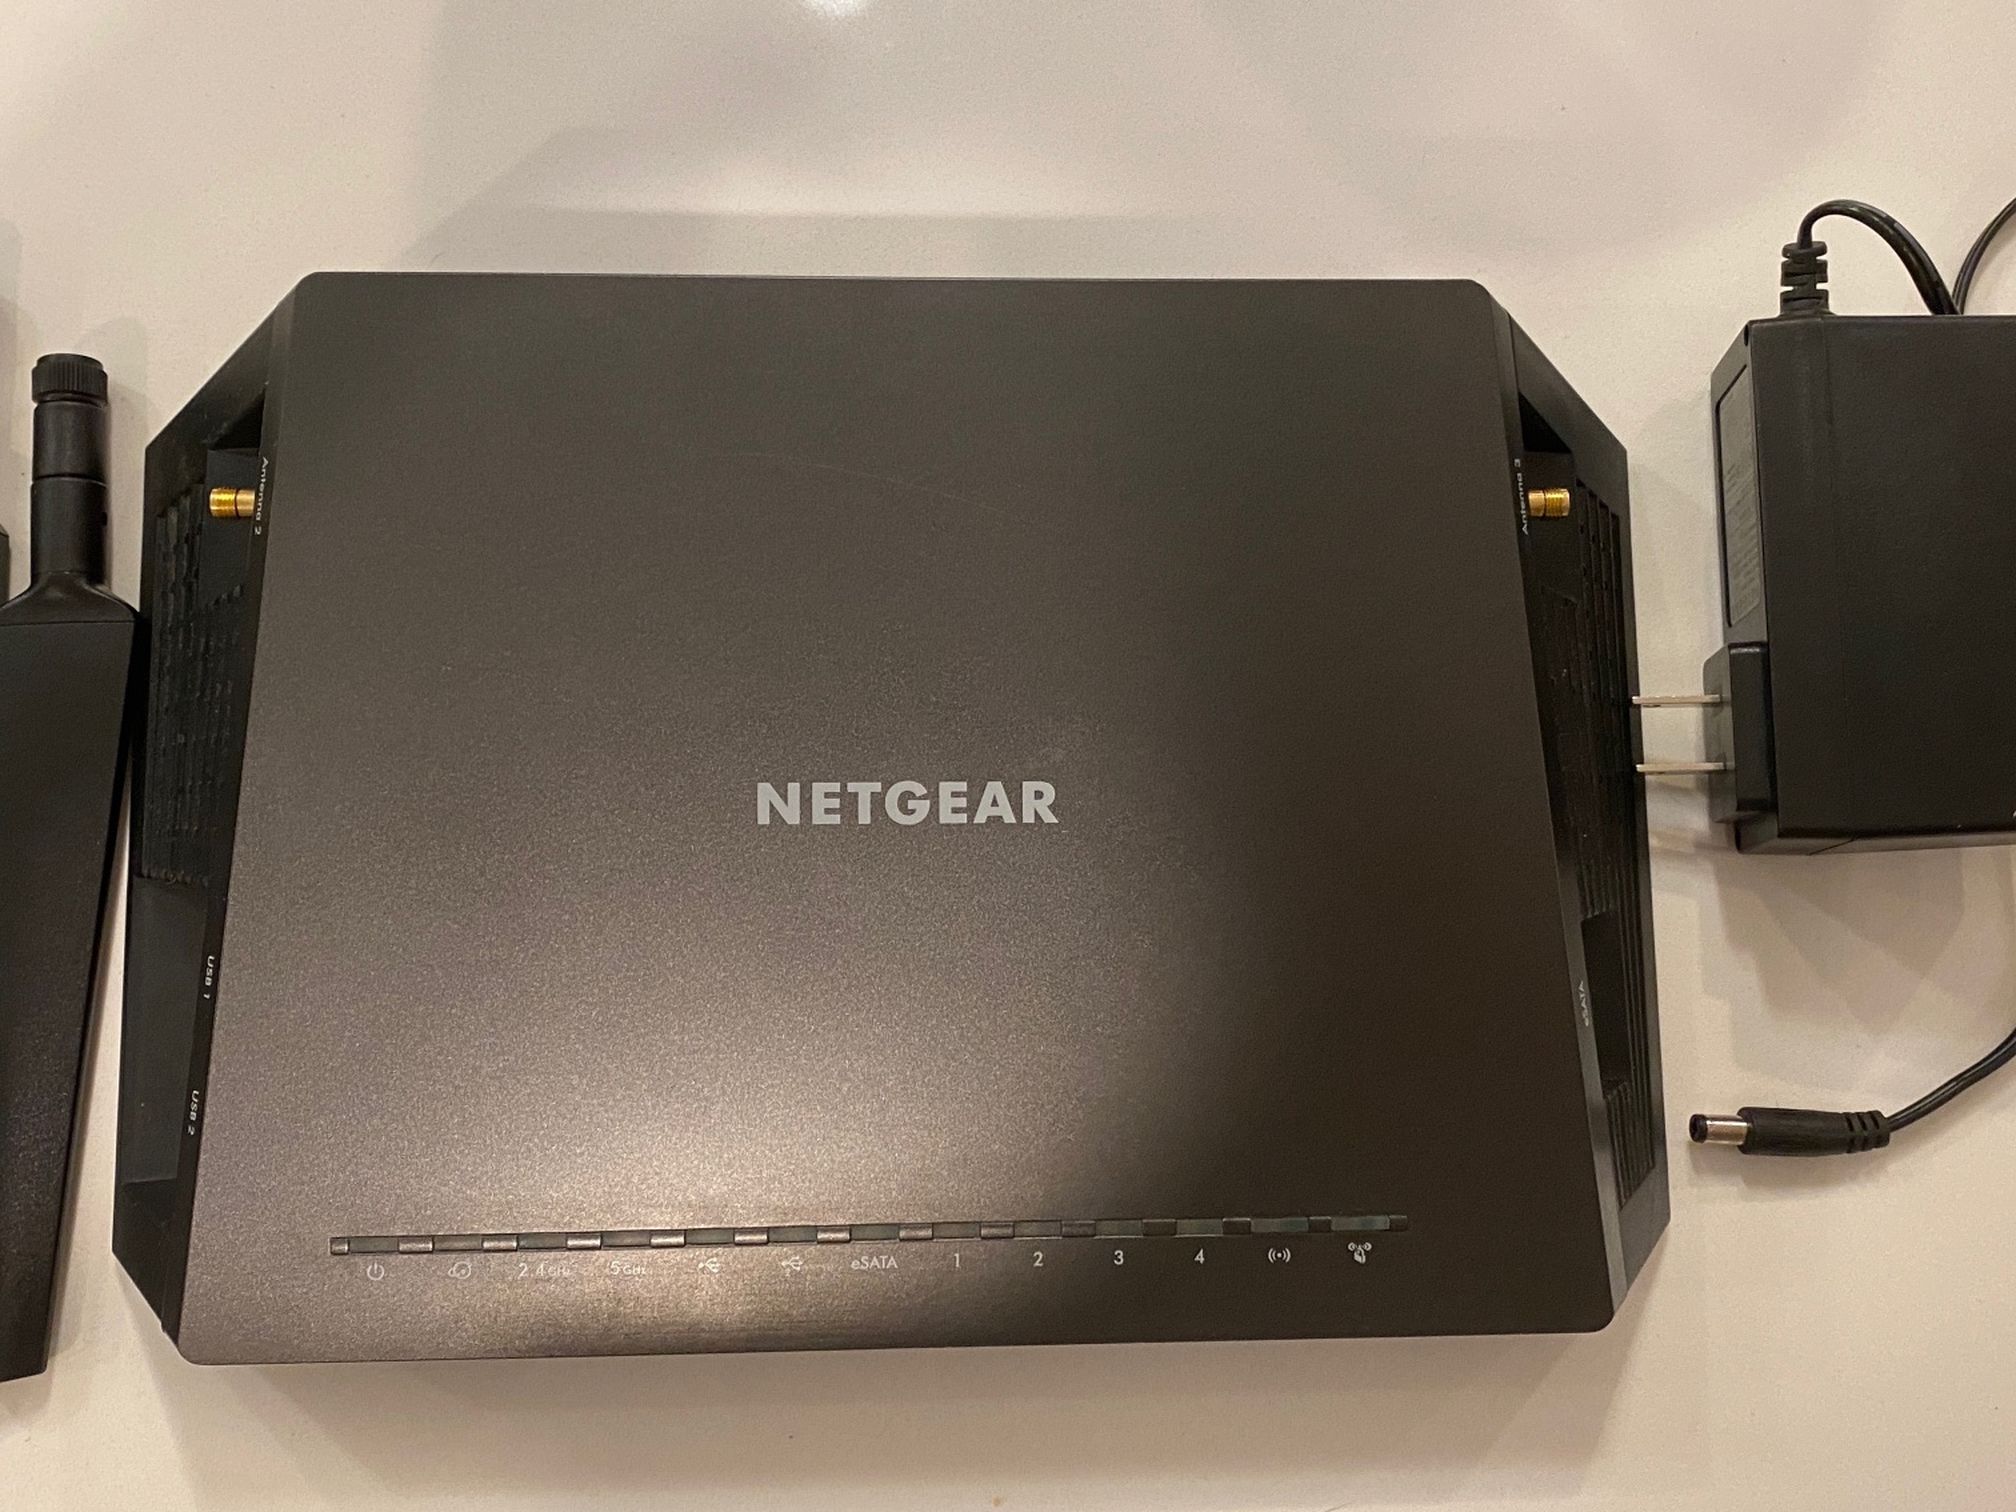 Netgear Nighthawk X4 Gaming Router